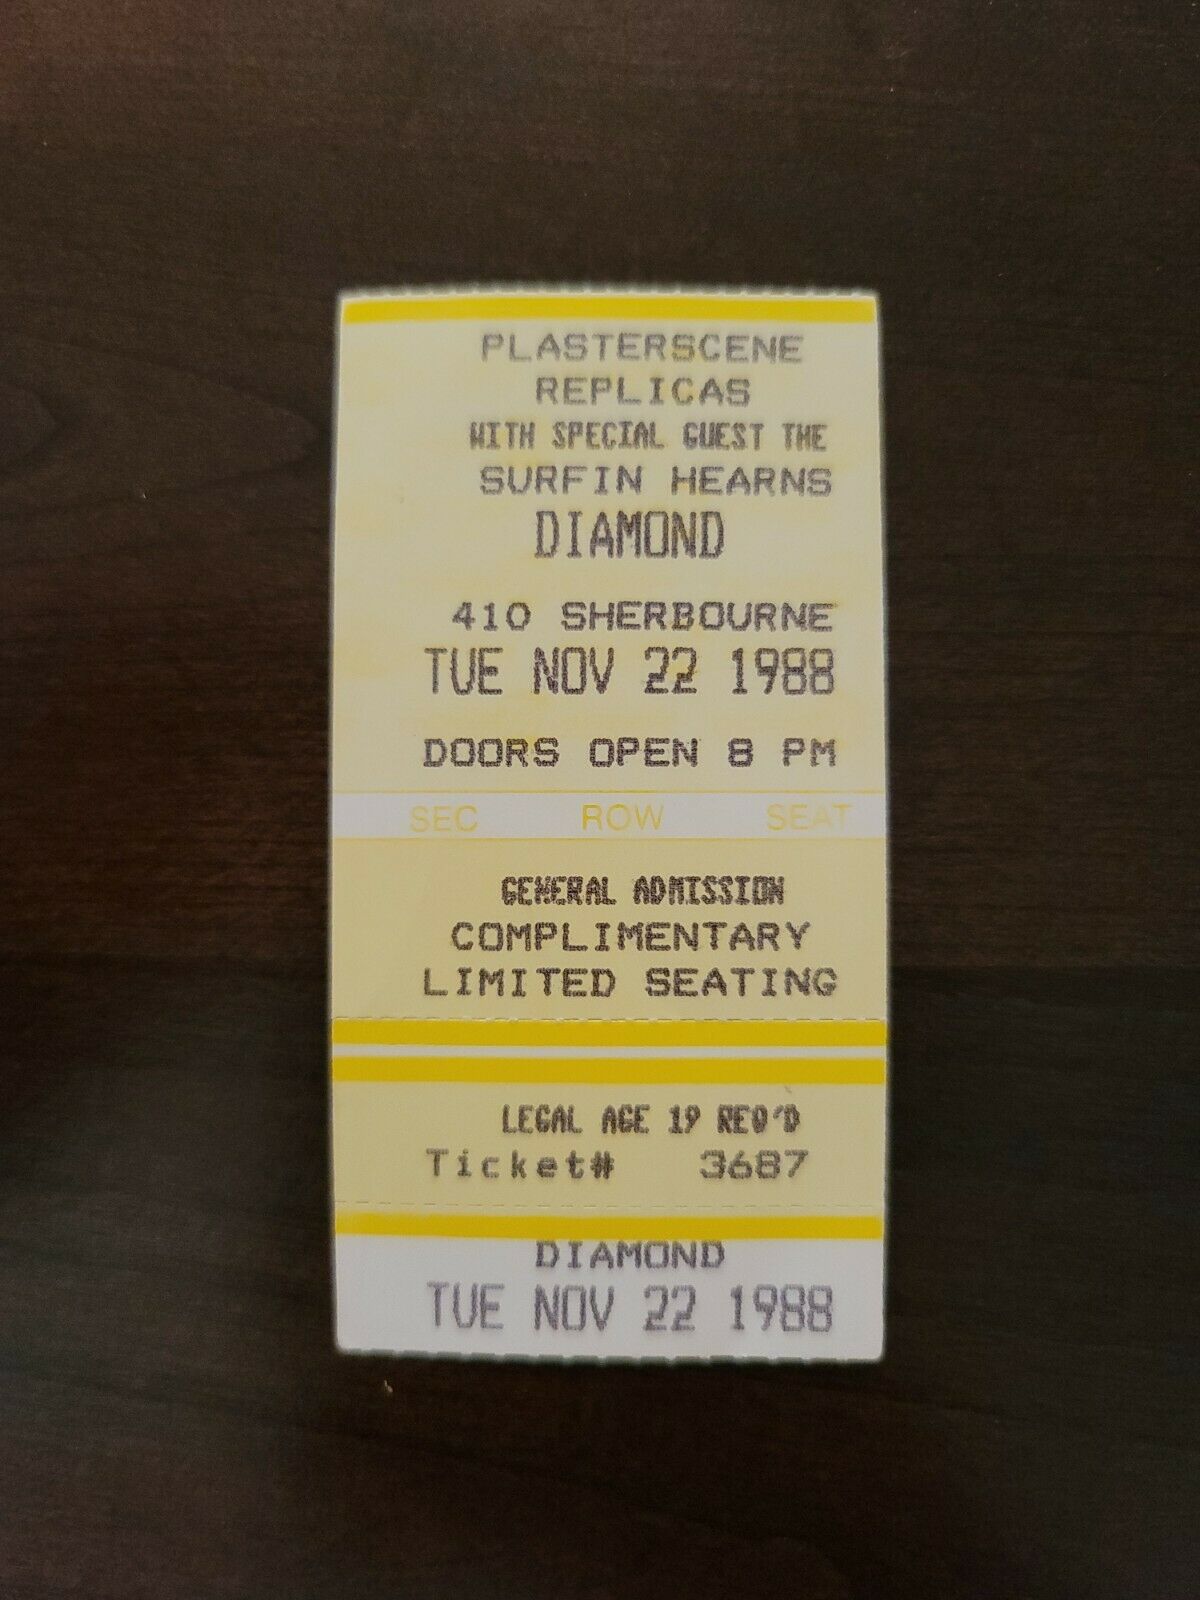 Plasterscene Replicas 1988, Toronto Diamond Club Original Concert Ticket Stub